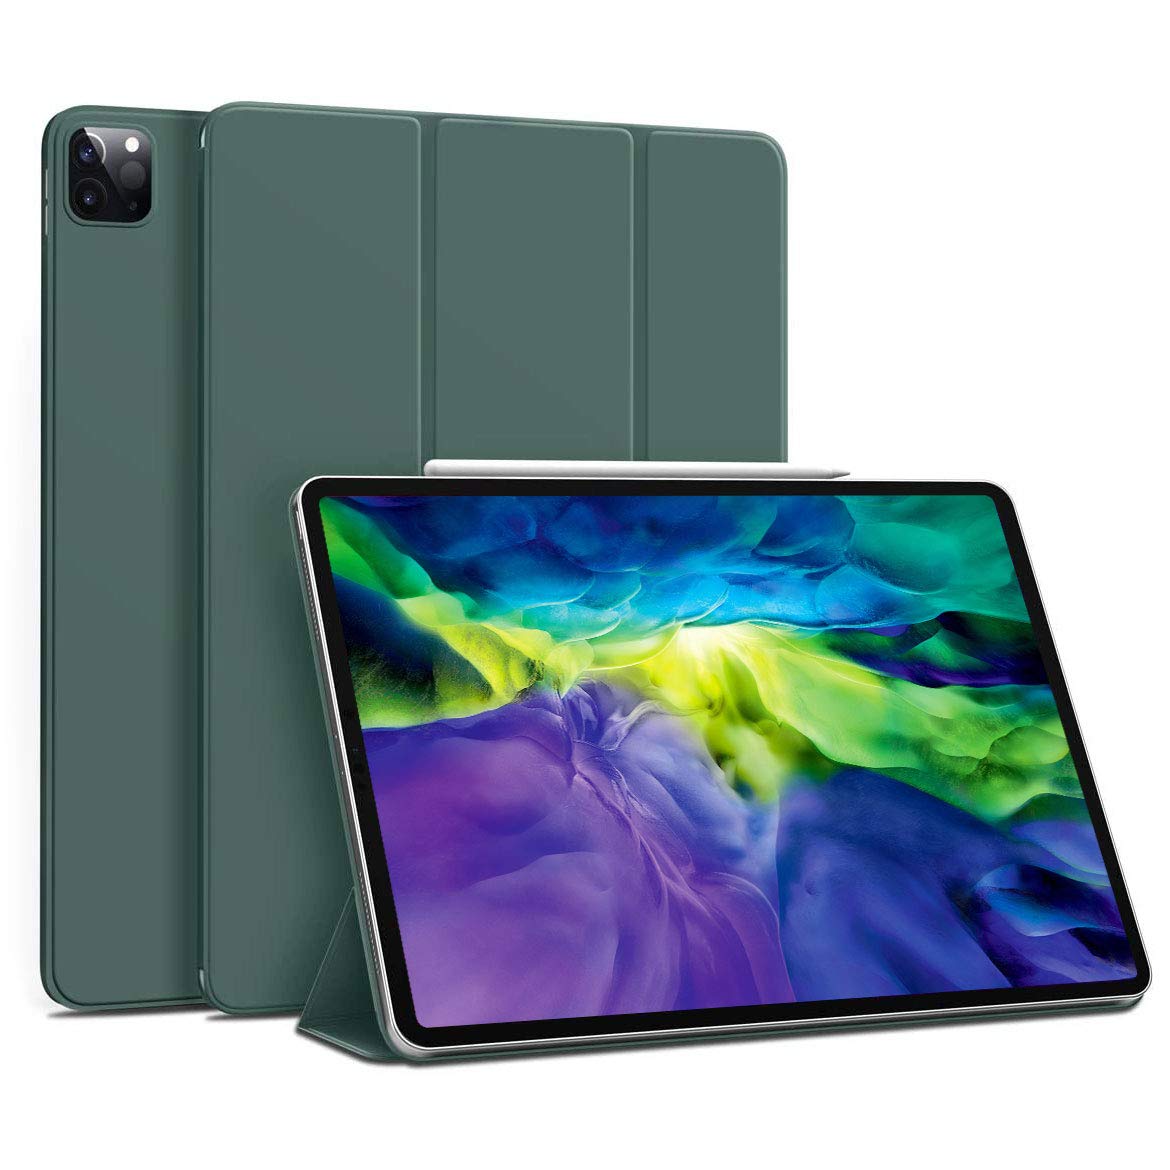 Arktis iPad Pro Hülle, magnetisches Smart Case kompatibel mit iPad Pro 11" (2020/2021) [Sleep & Wake-Up-Funktion] Schutzhülle Smart Cover Case Nachtgrün